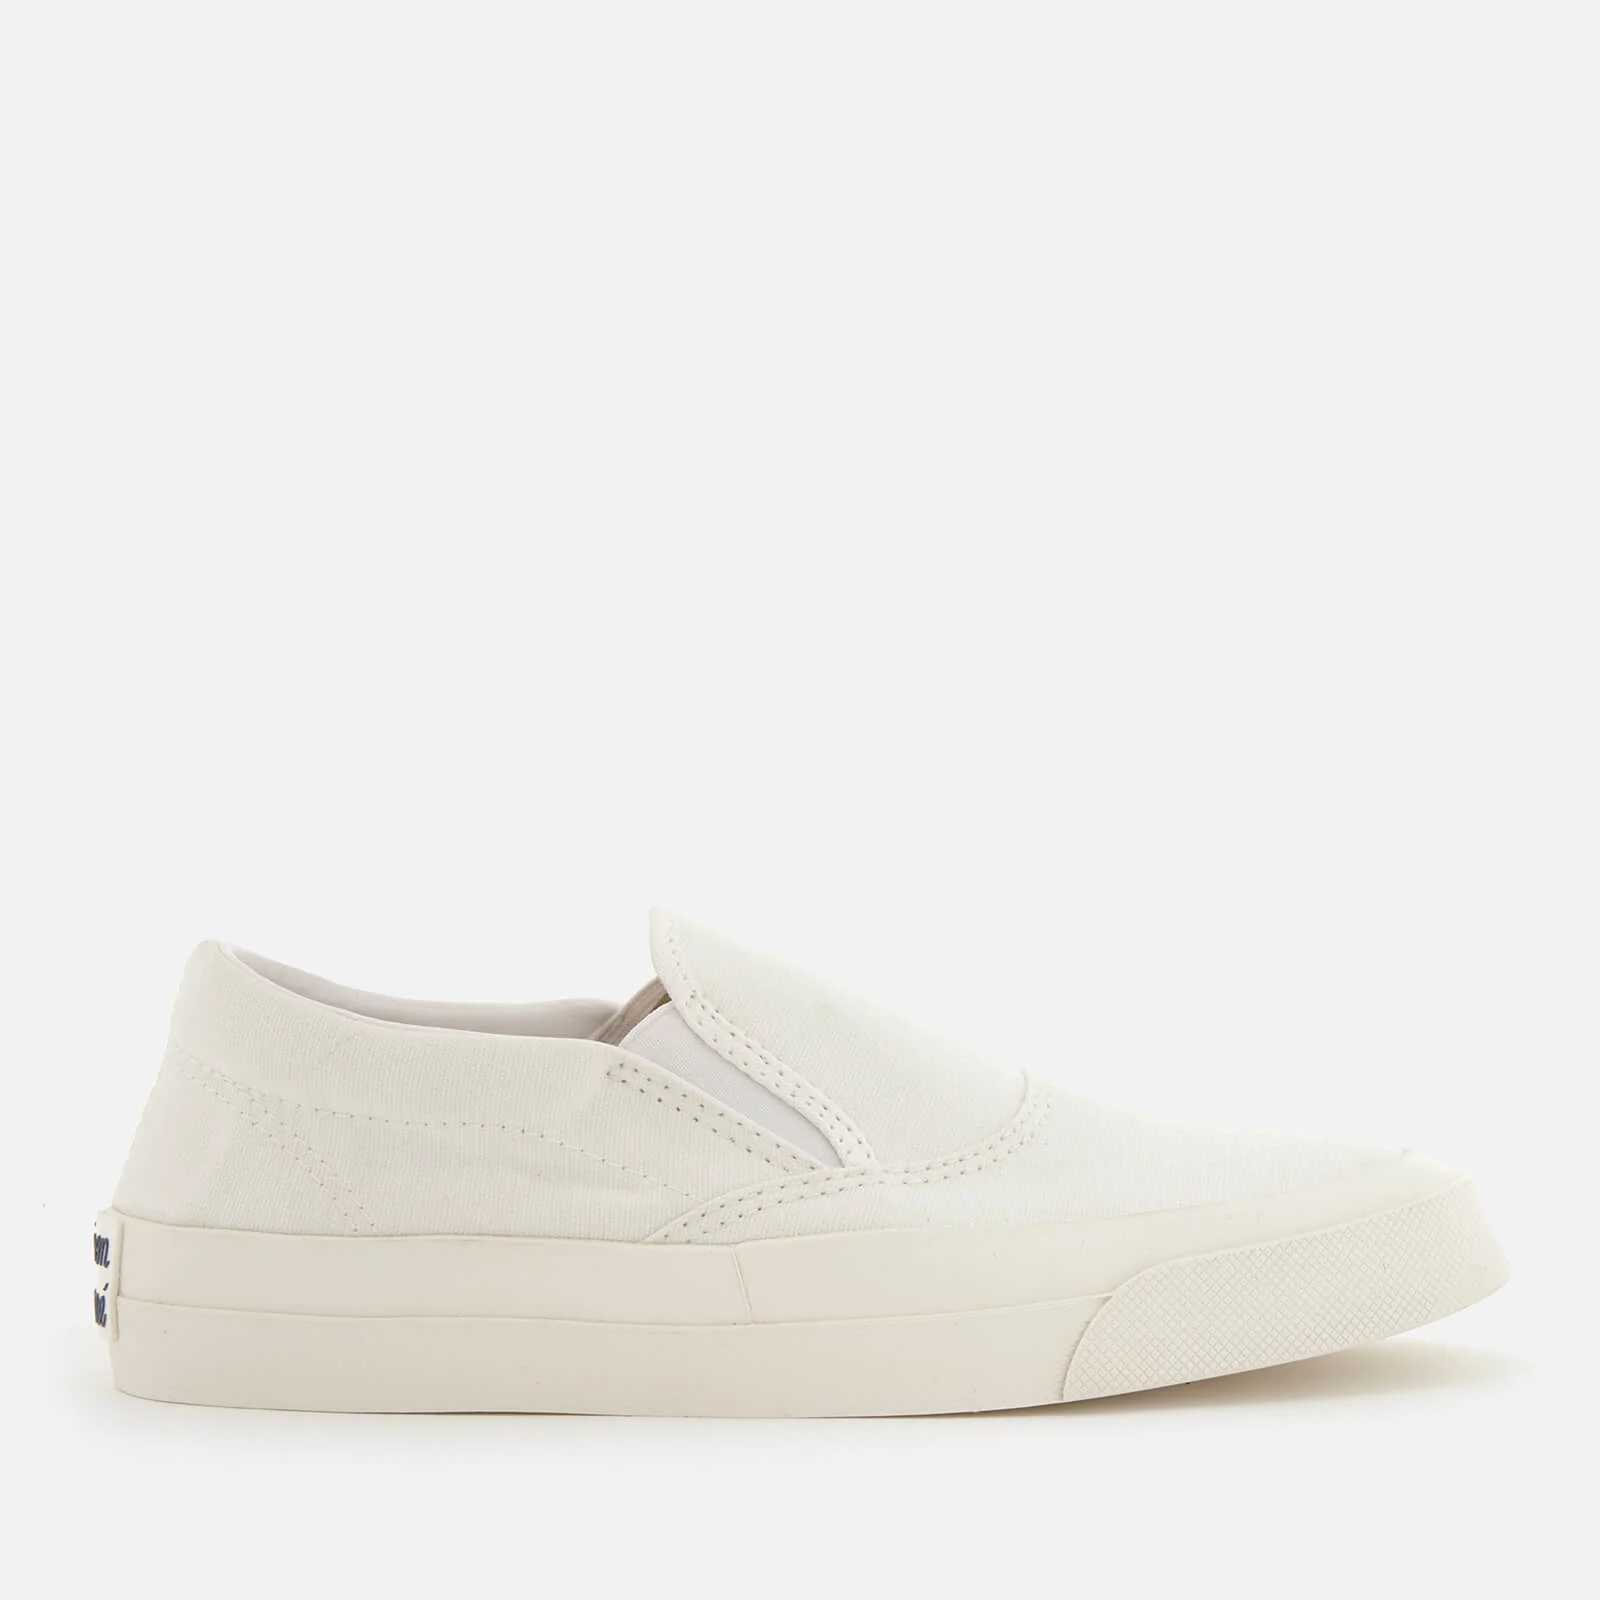 Maison Kitsuné Slip On Sneakers - White Image 1